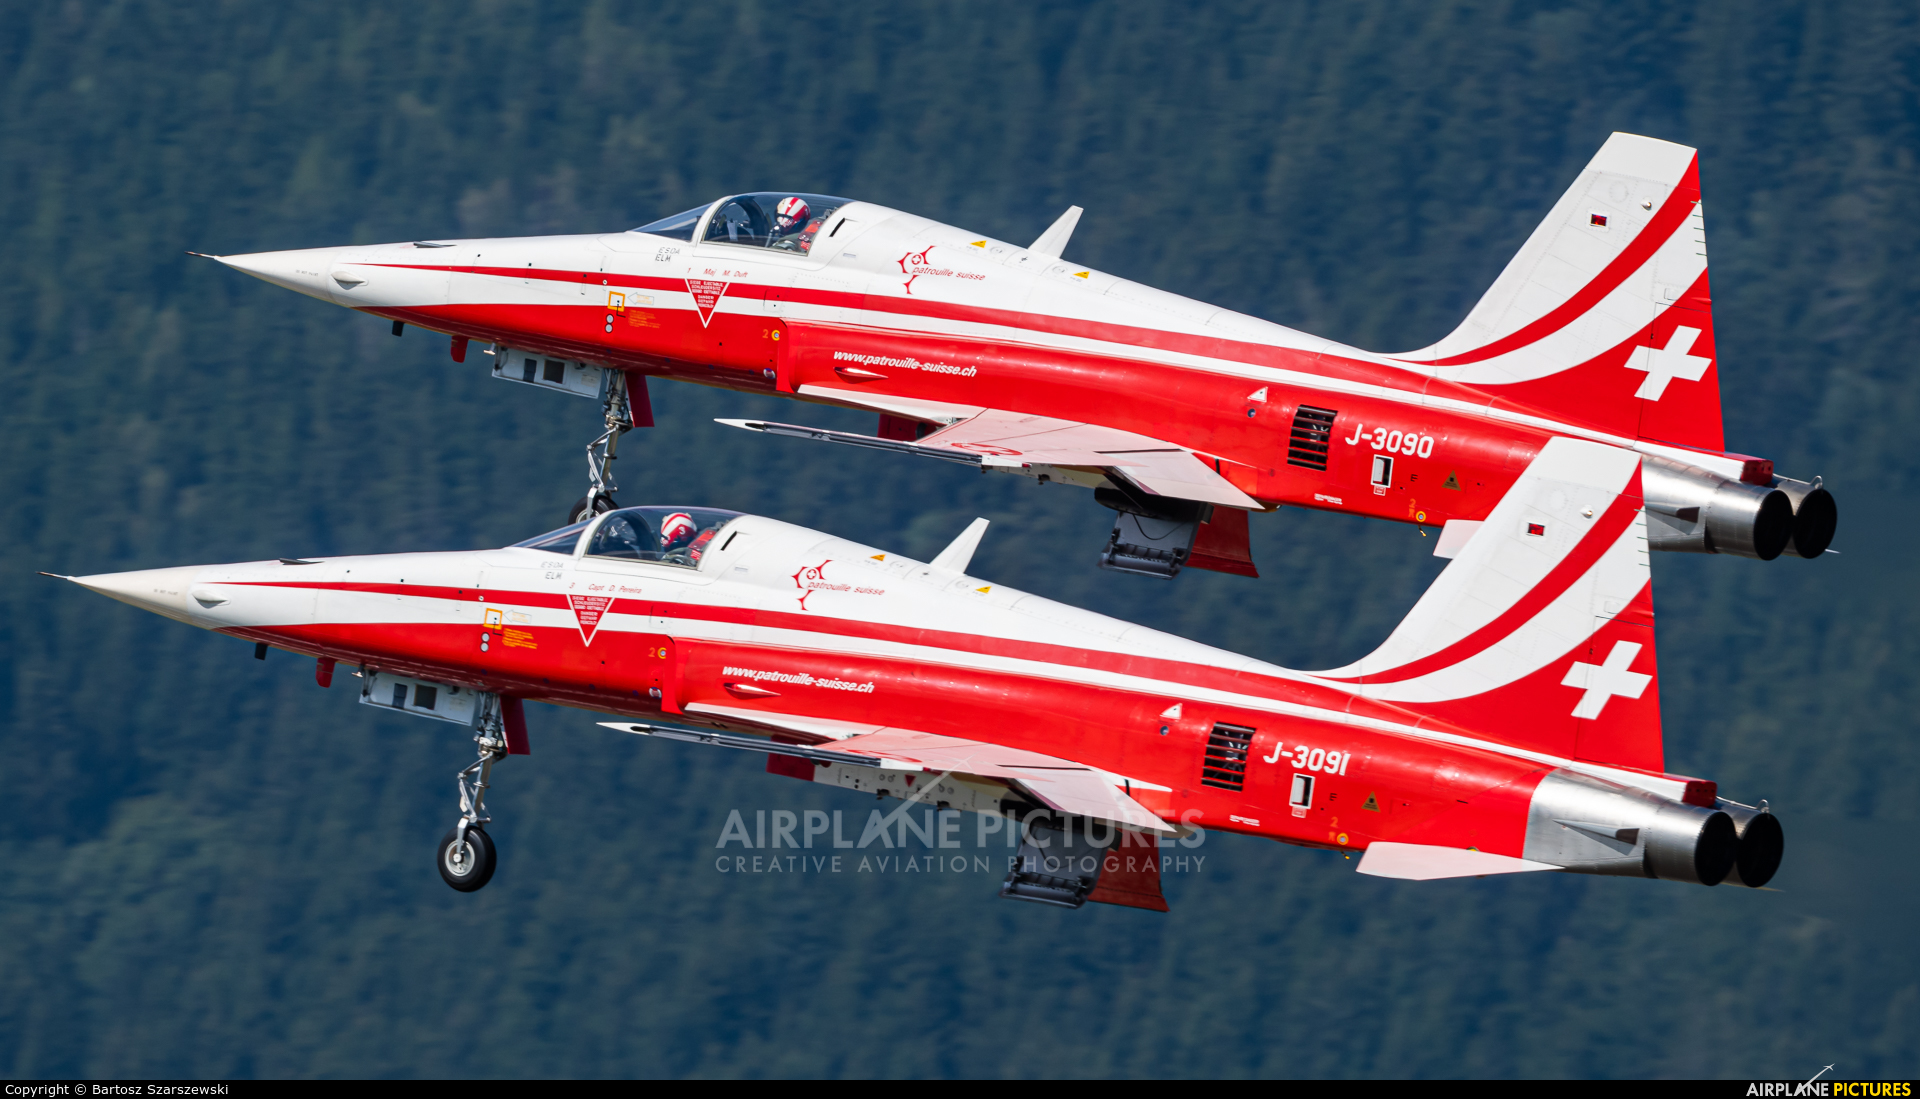 Switzerland - Air Force: Patrouille Suisse J-3090 aircraft at Zeltweg